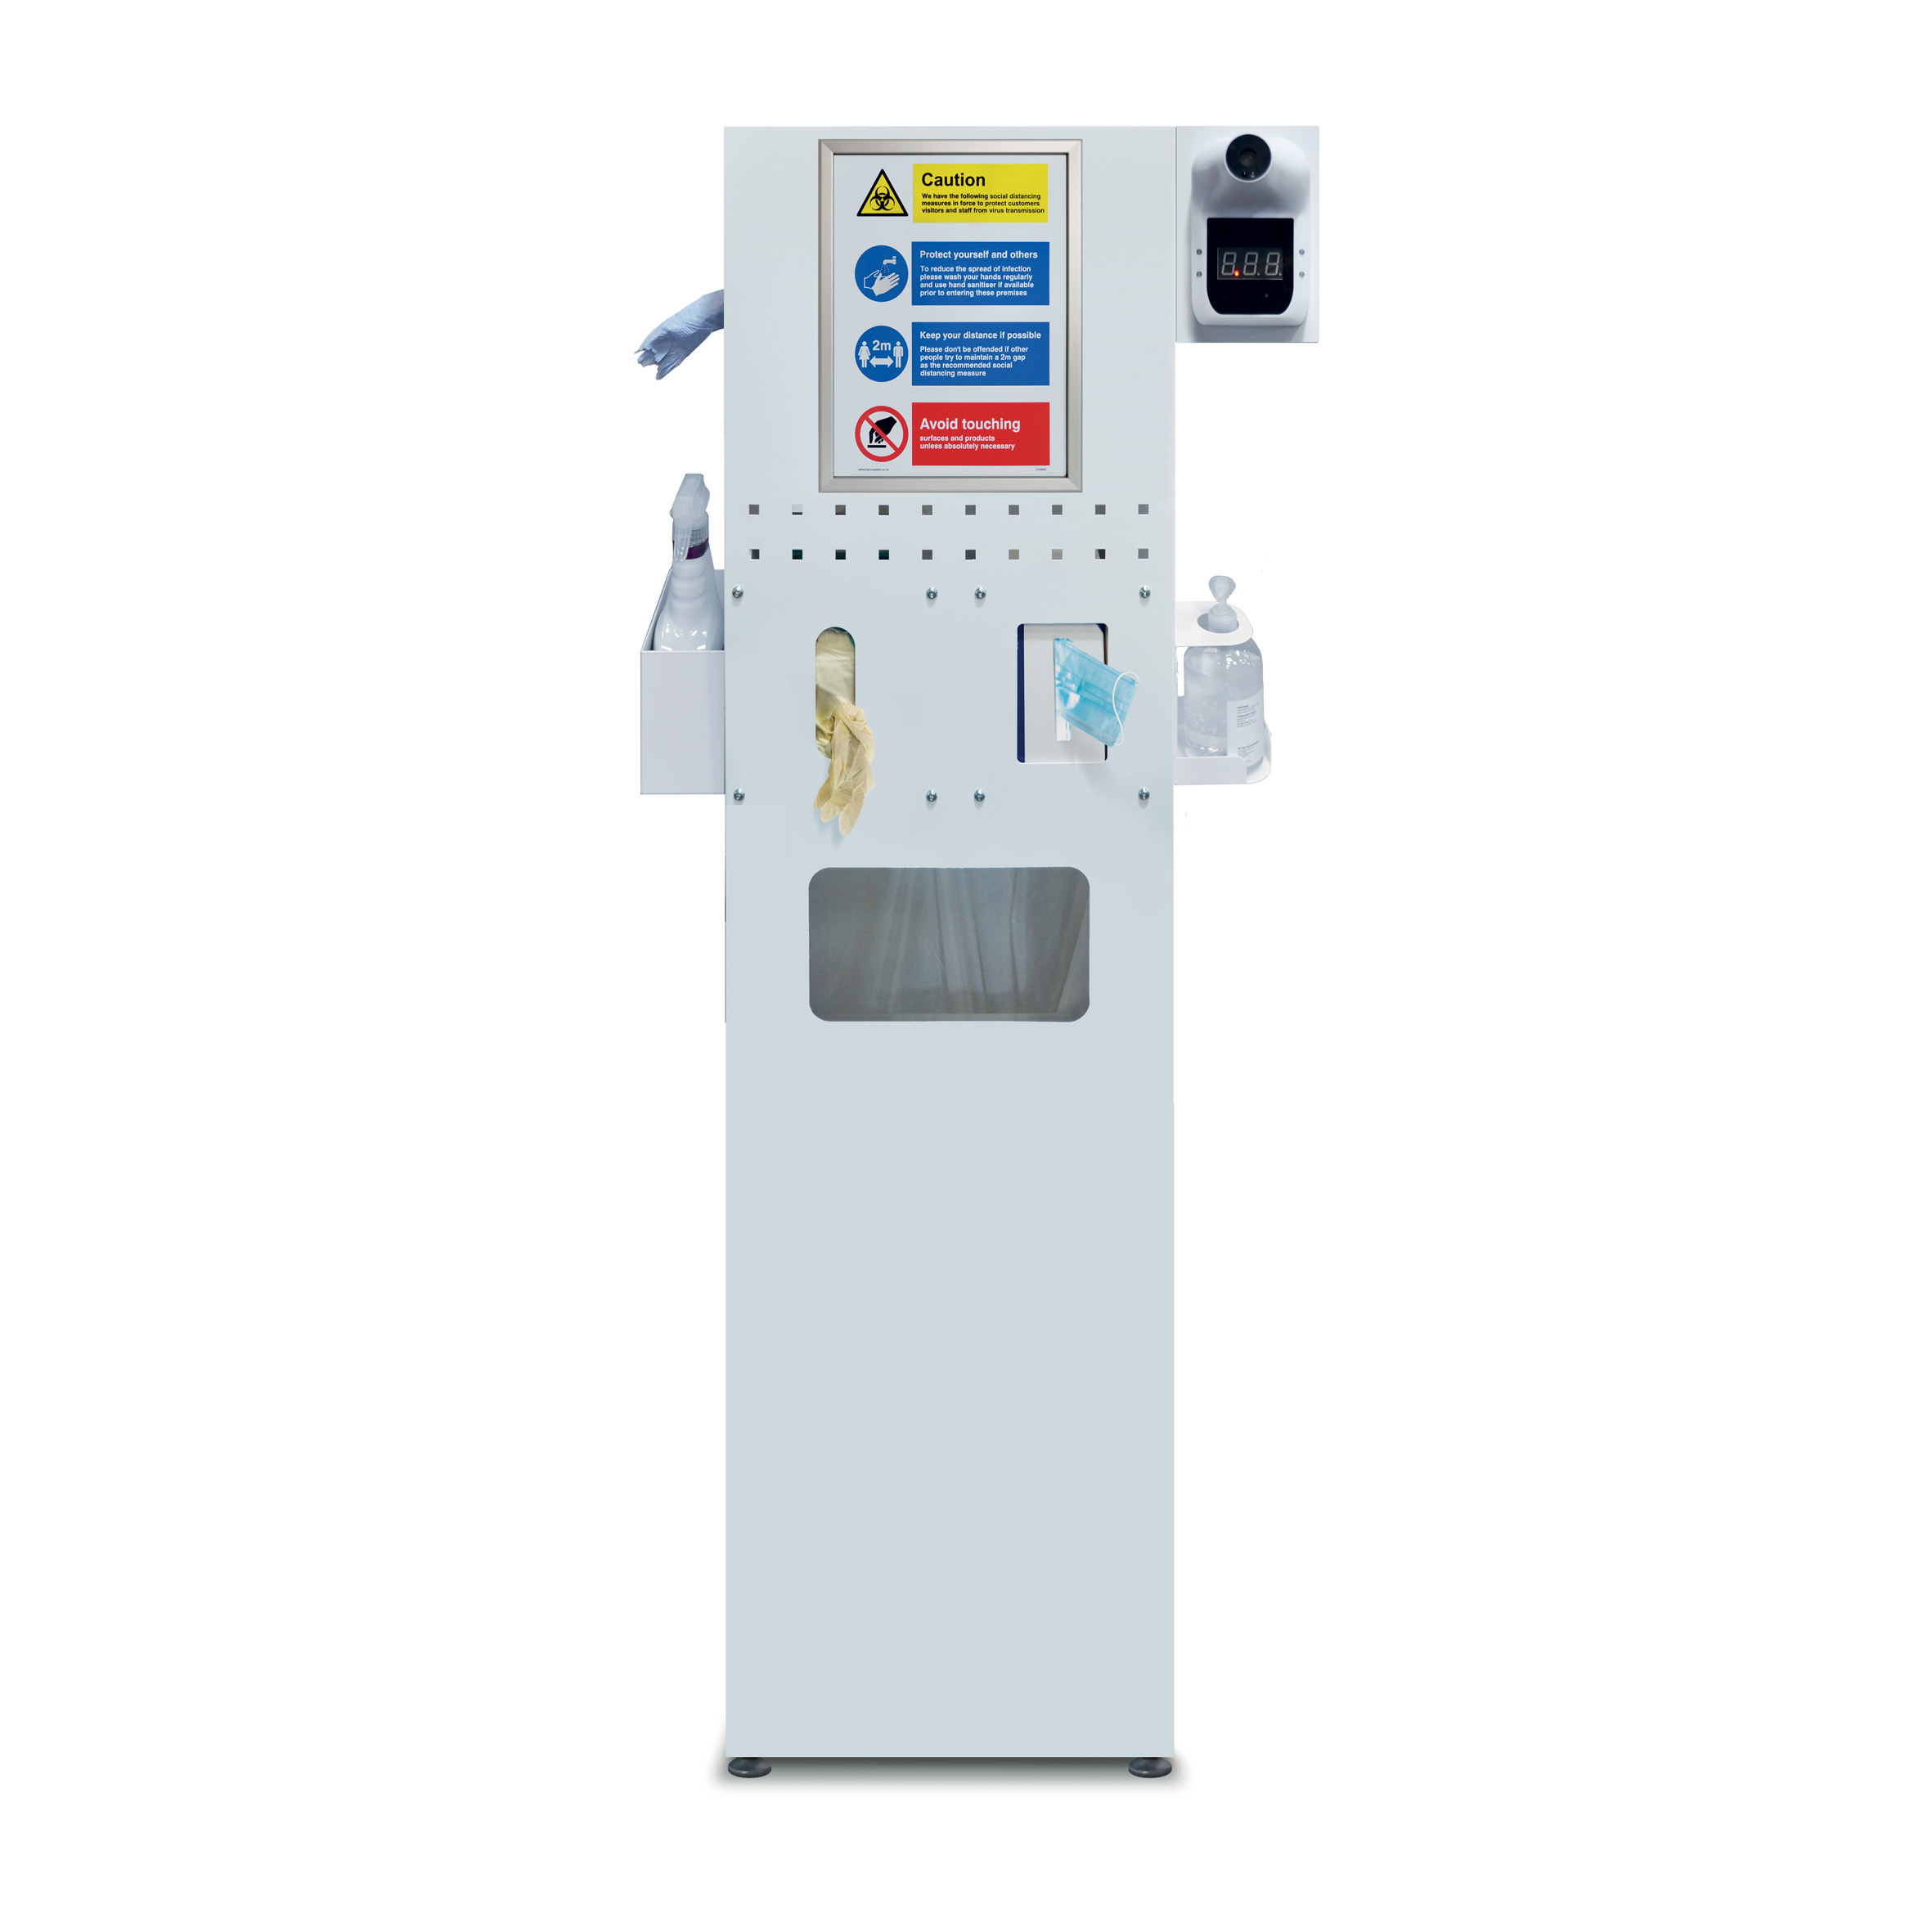 Sanitatiestation met infraroodthermometer